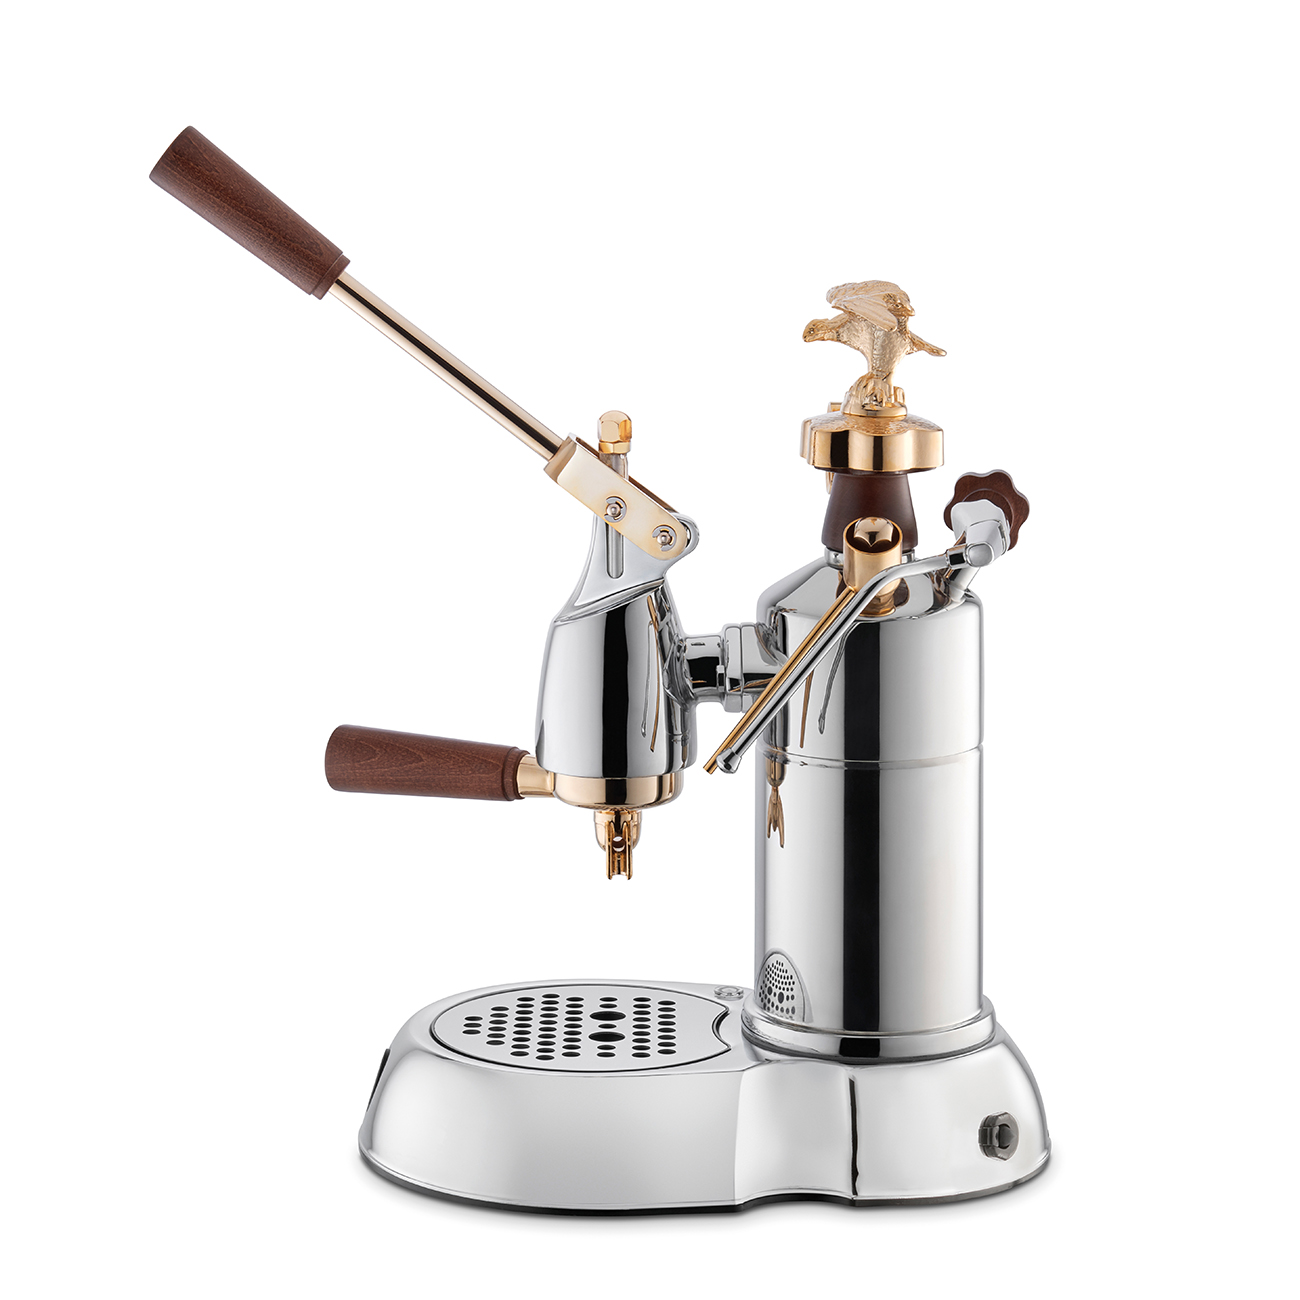 La Pavoni Expo 2015 Espressomaschine